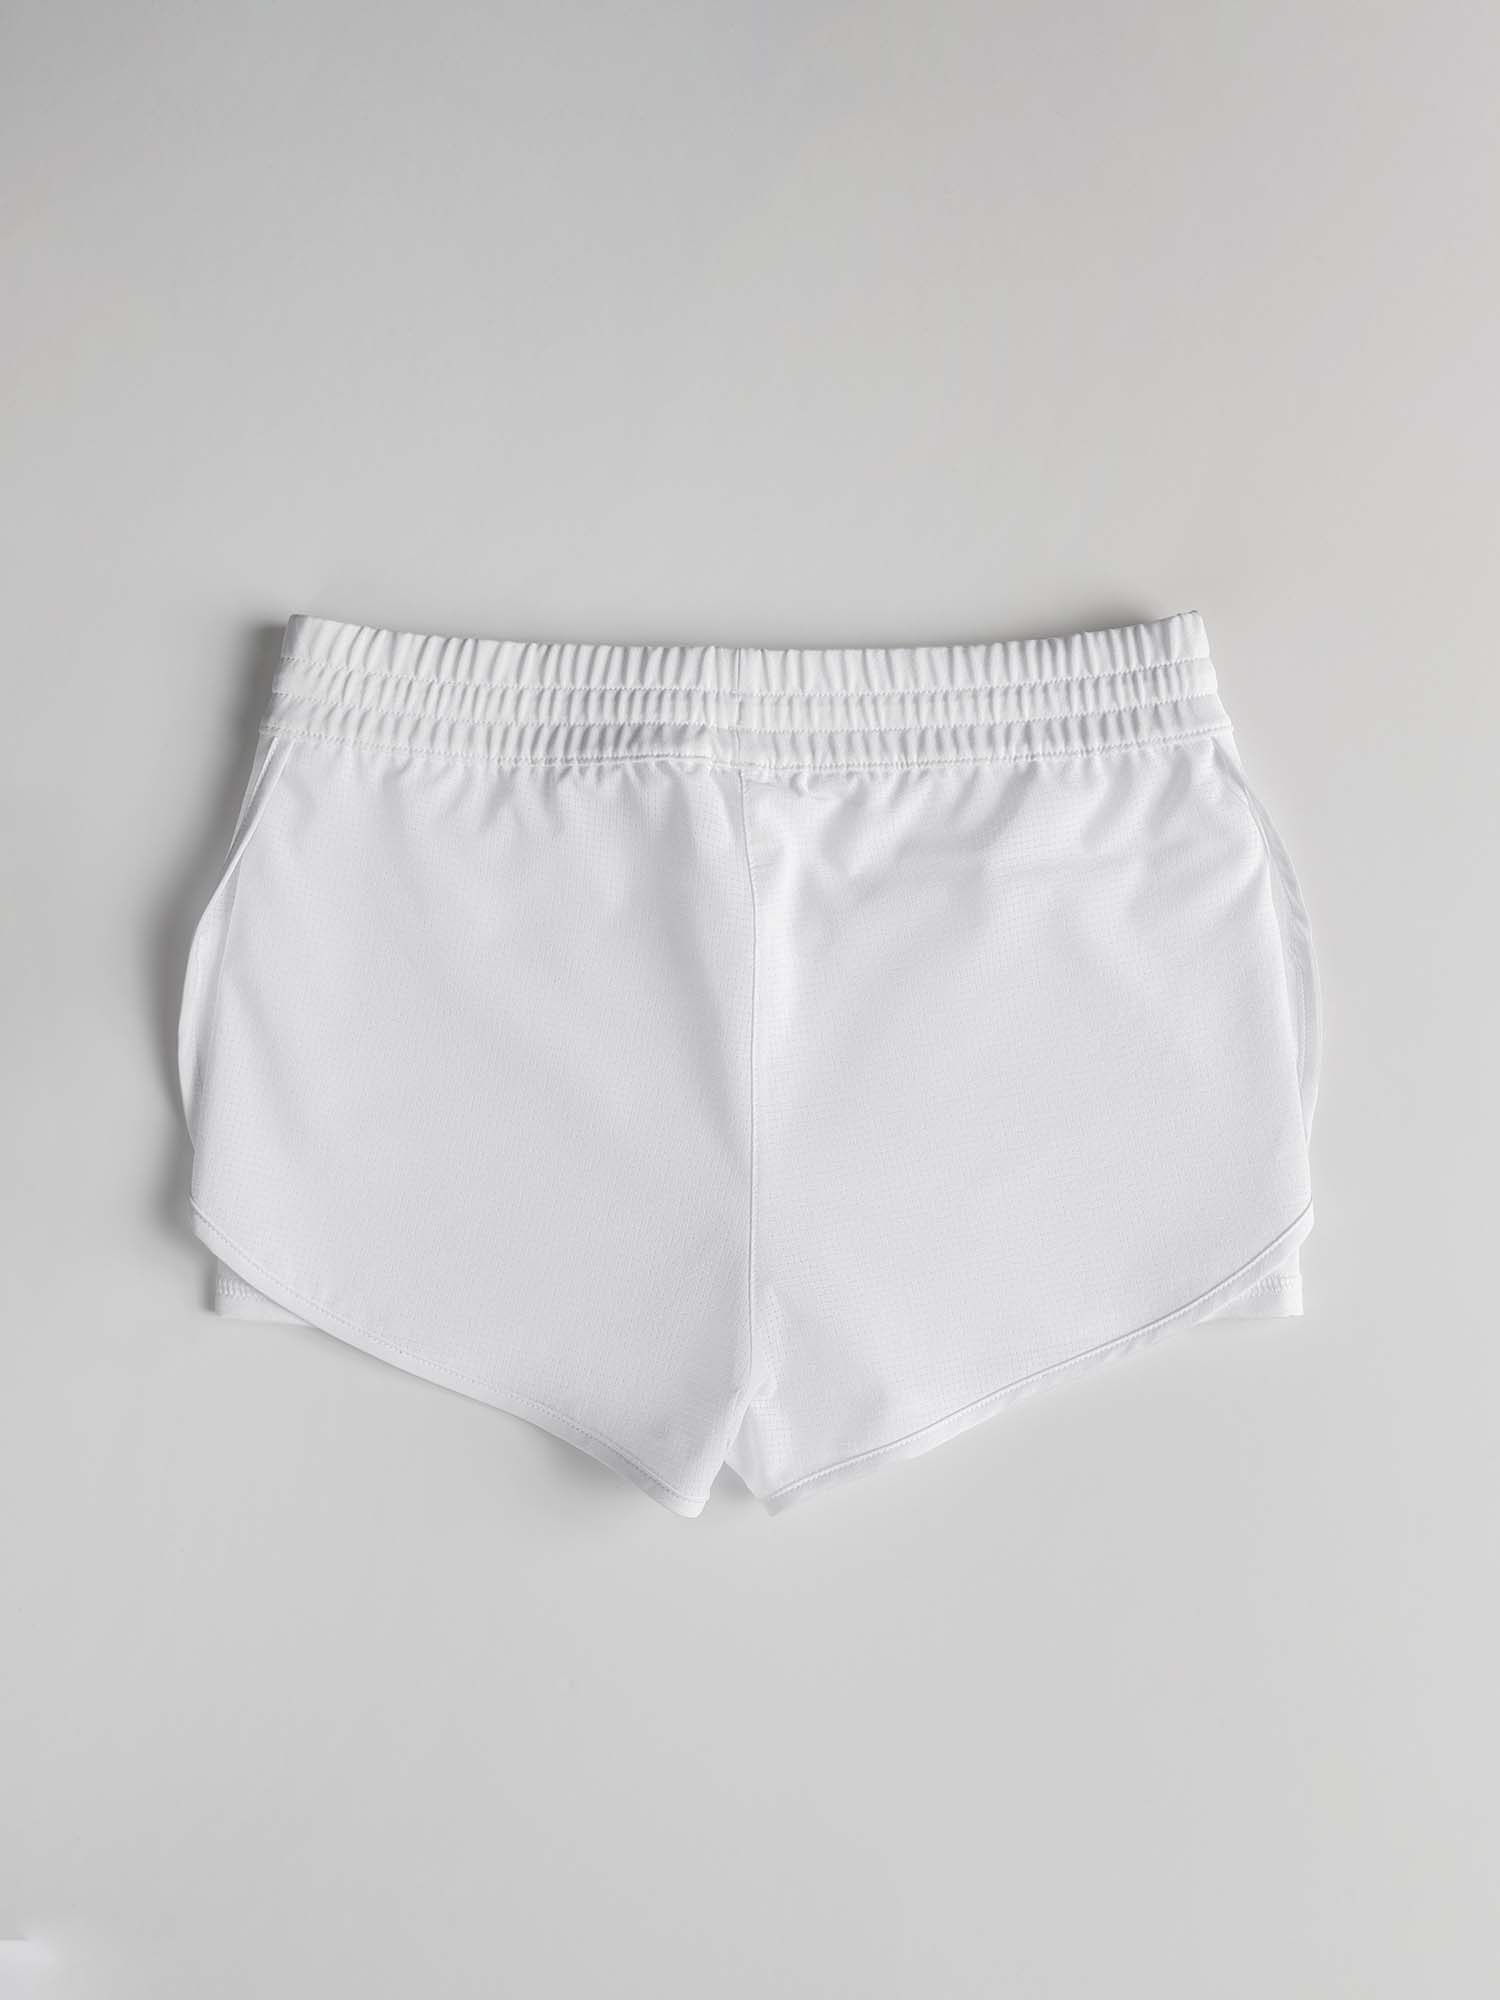 Girls White Shorts.